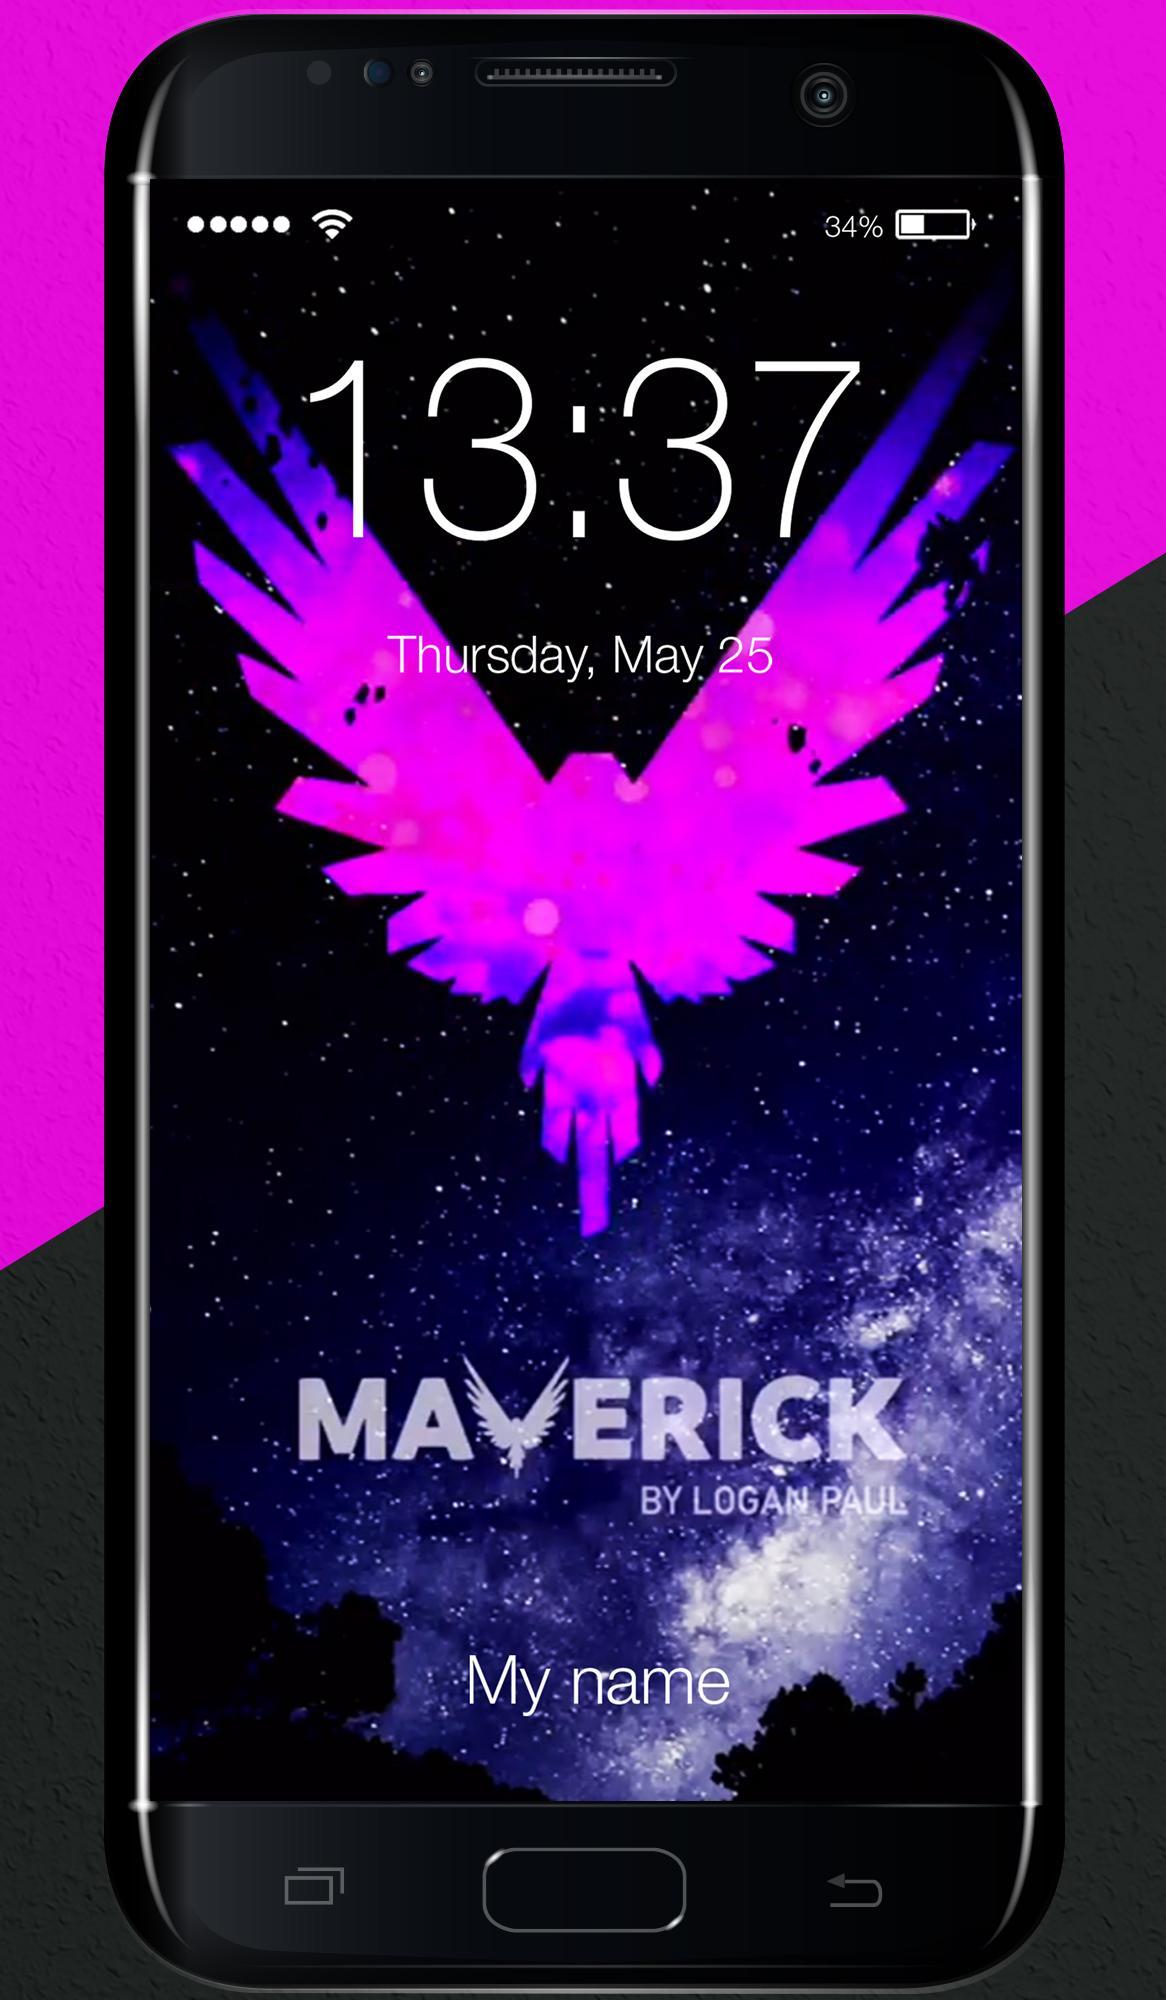 Maverick Logang Wallpaper Logan Paul Applock For Android Apk